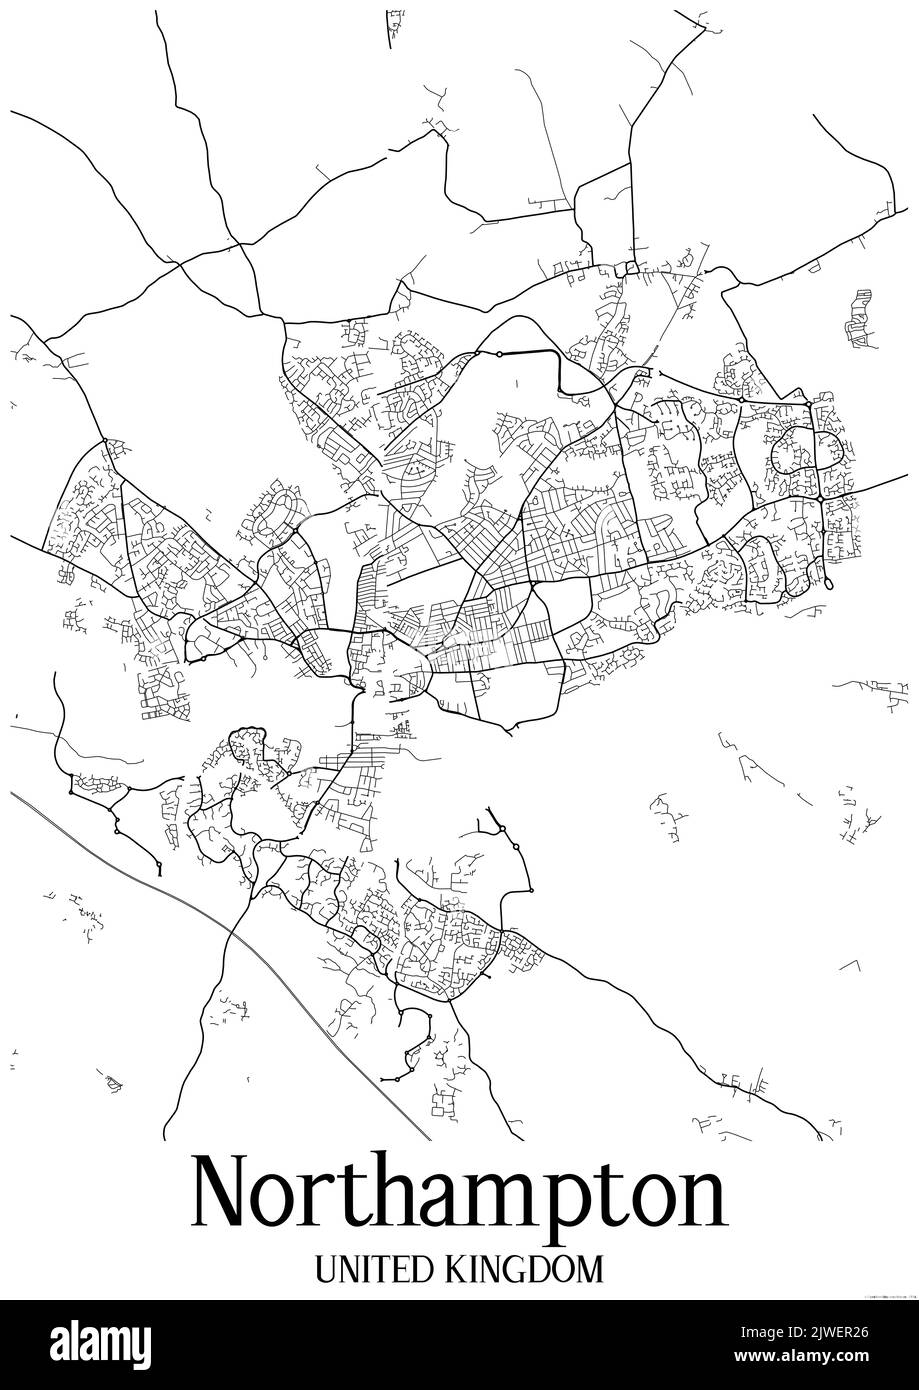 Black and white classic urban map of Northampton United Kingdom.This ...